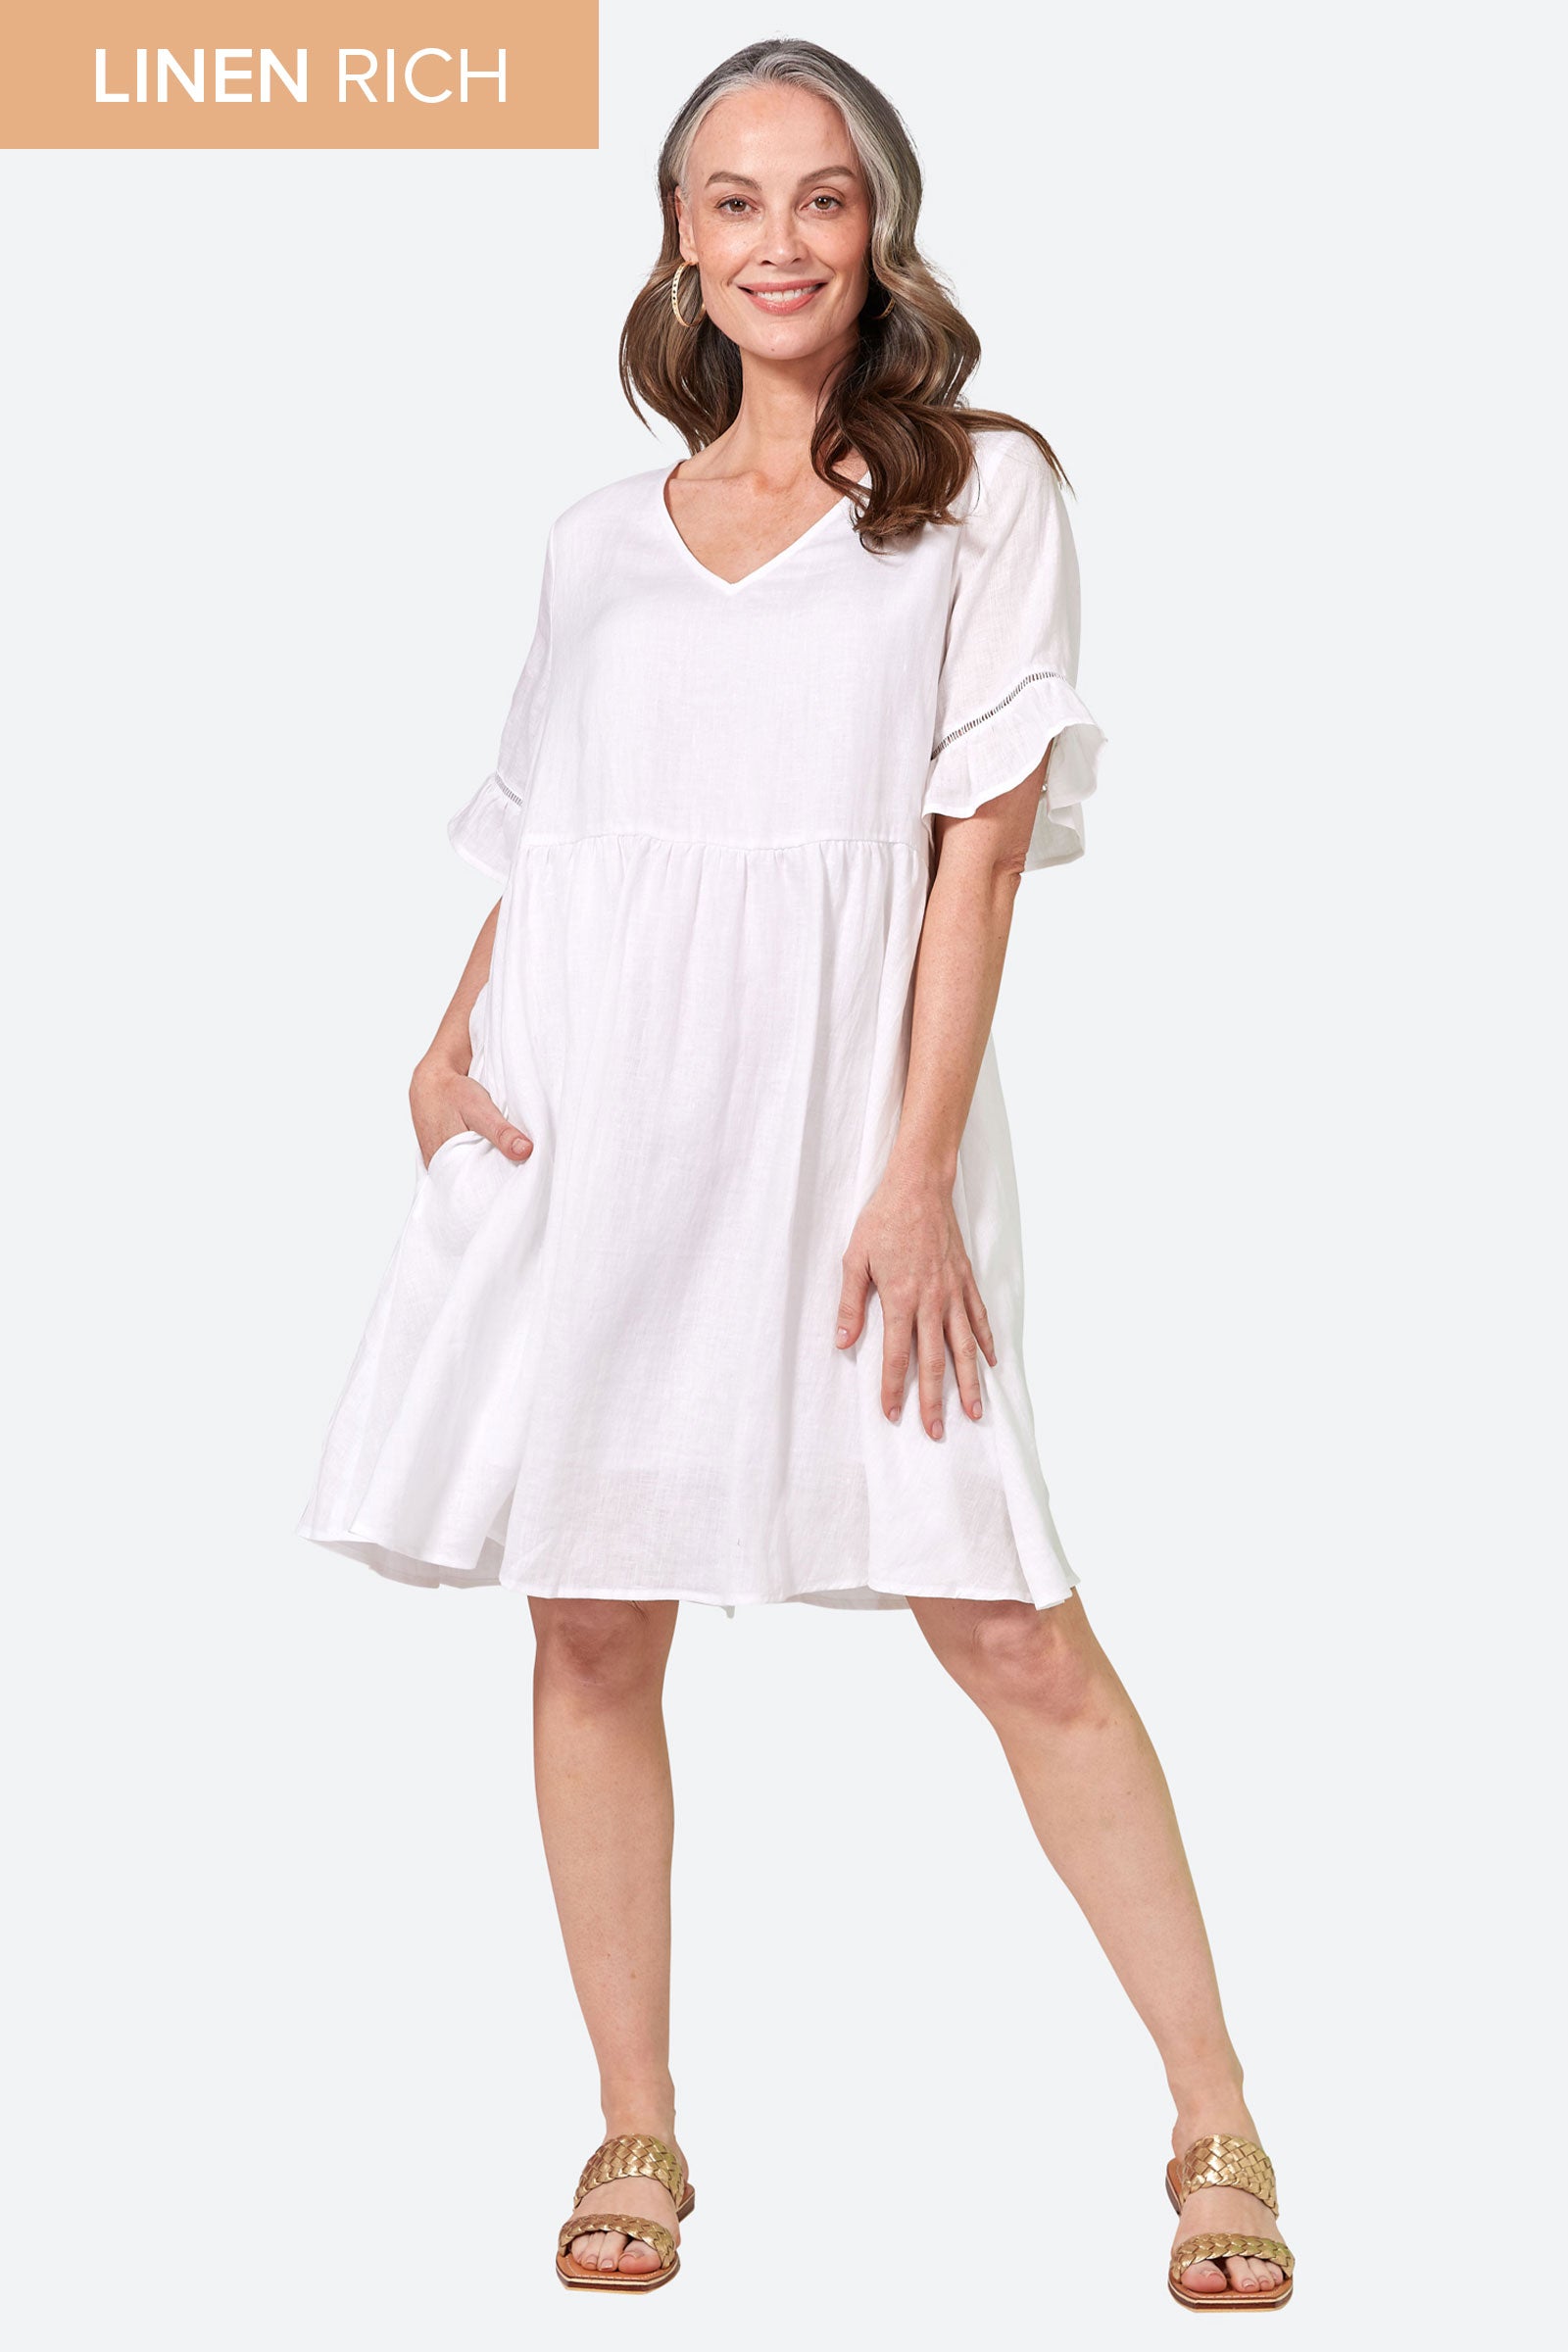 La Vie Dress - Blanc - eb&ive Clothing - Dress Mini Linen